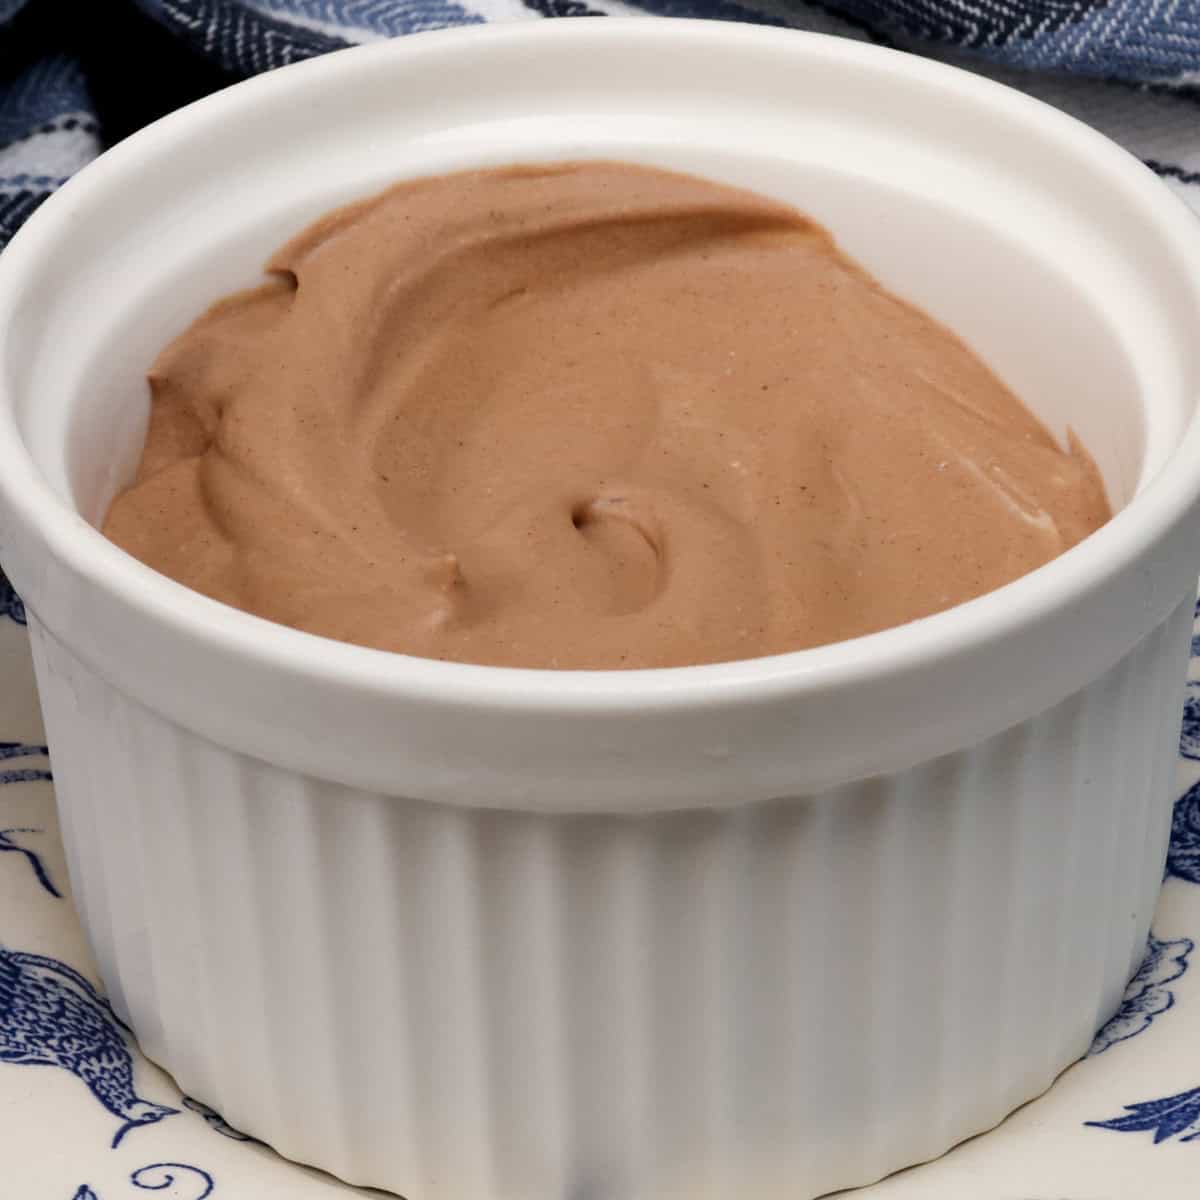 a small bowl of no churn chocolate ice cream.